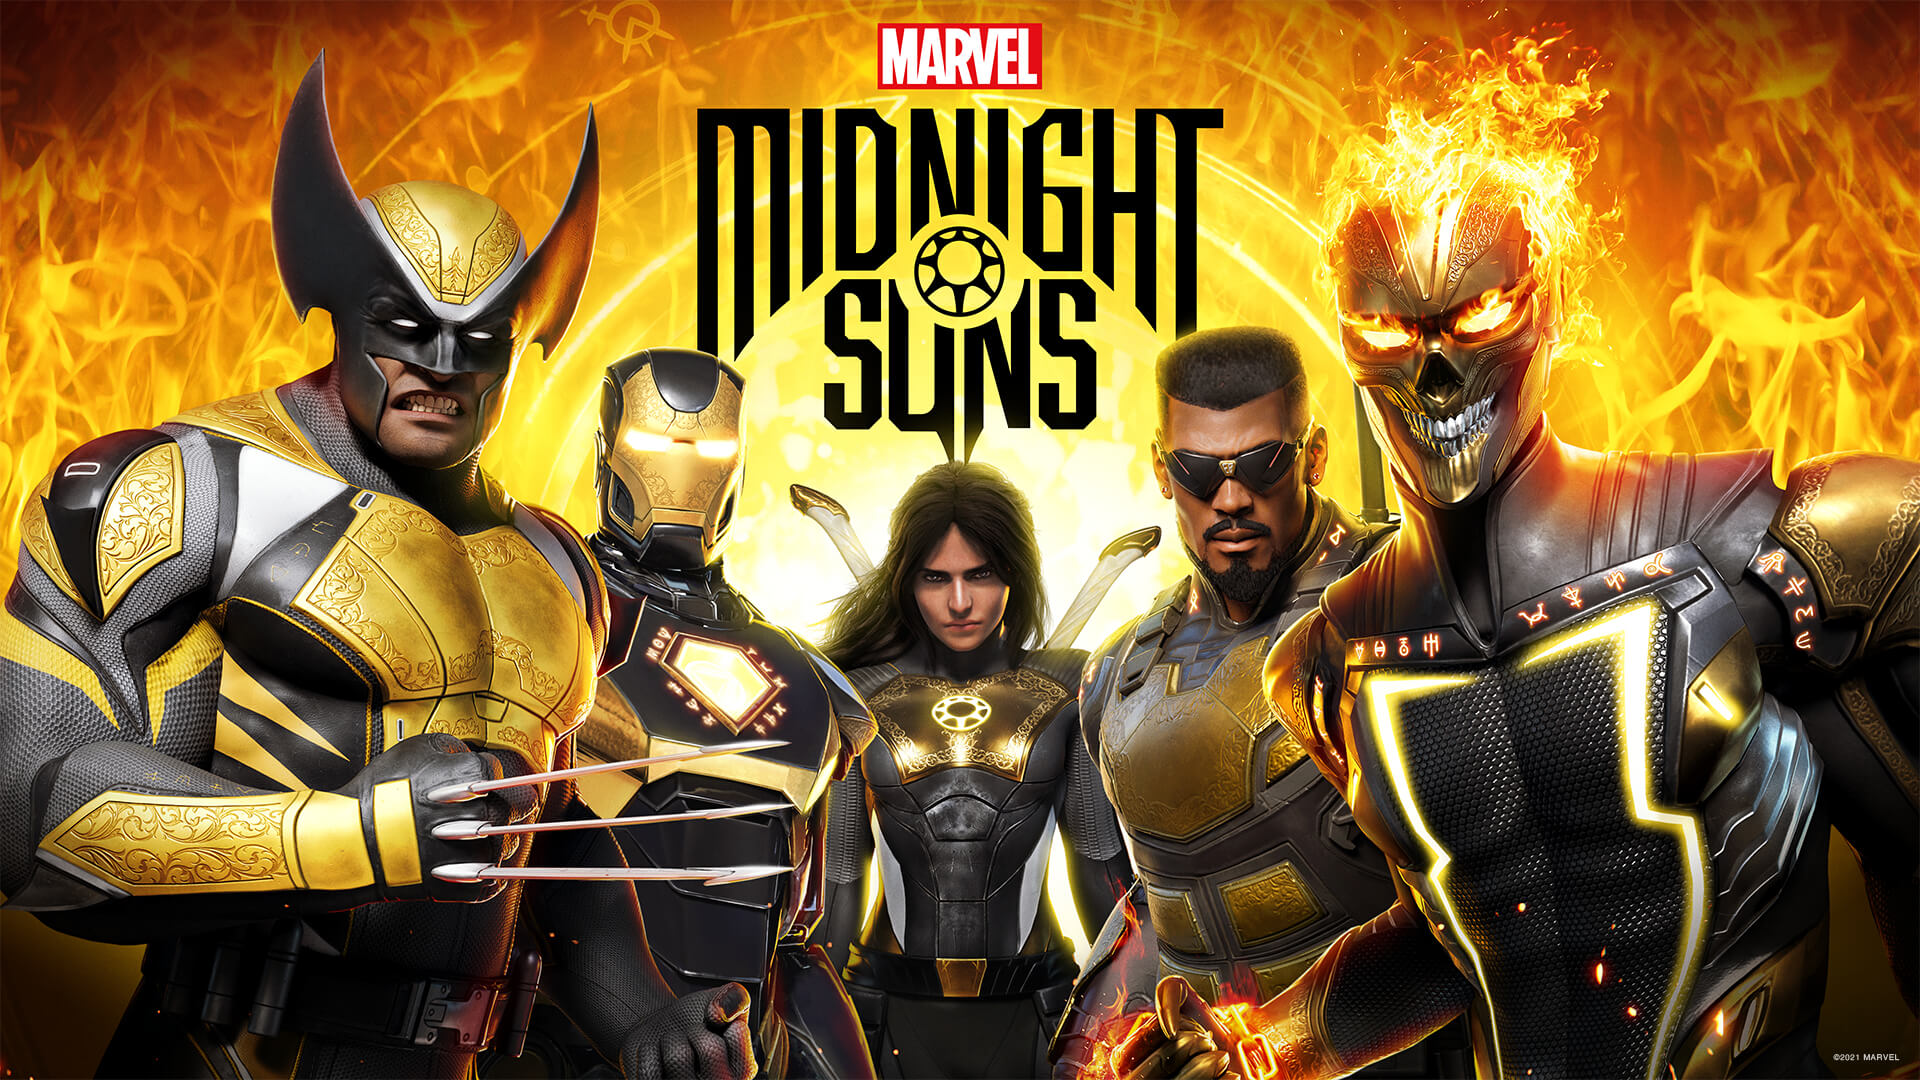 Marvel's Midnight Suns 2K Games ComicsOwl